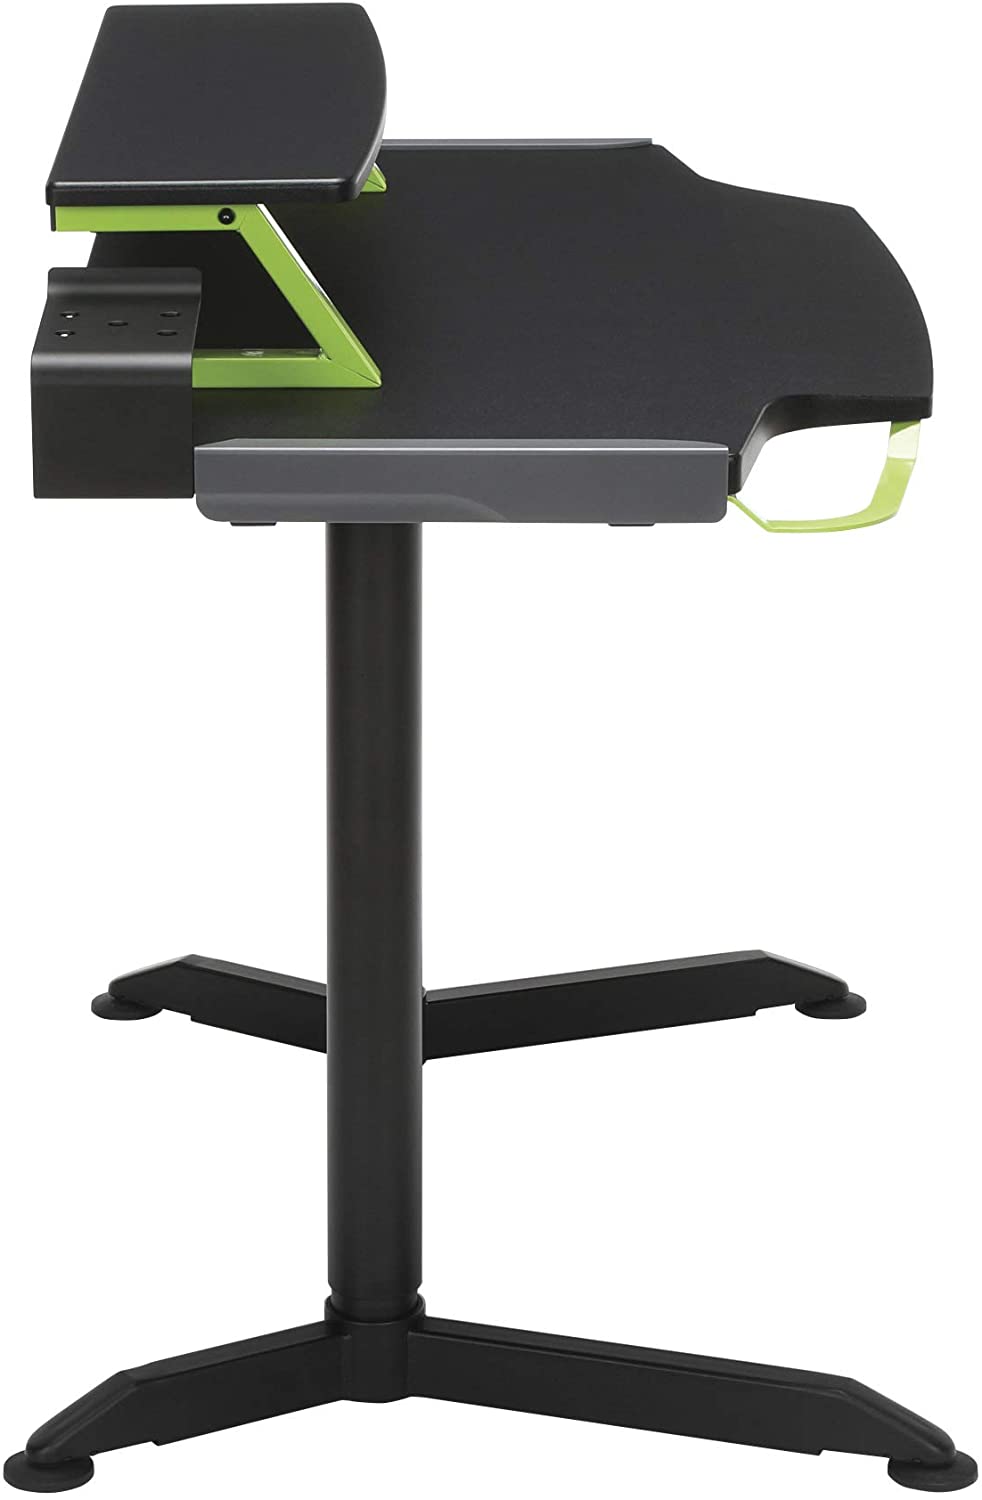 Minimalist Gaming Desk Adjustable Height Amazon with Dual Monitor